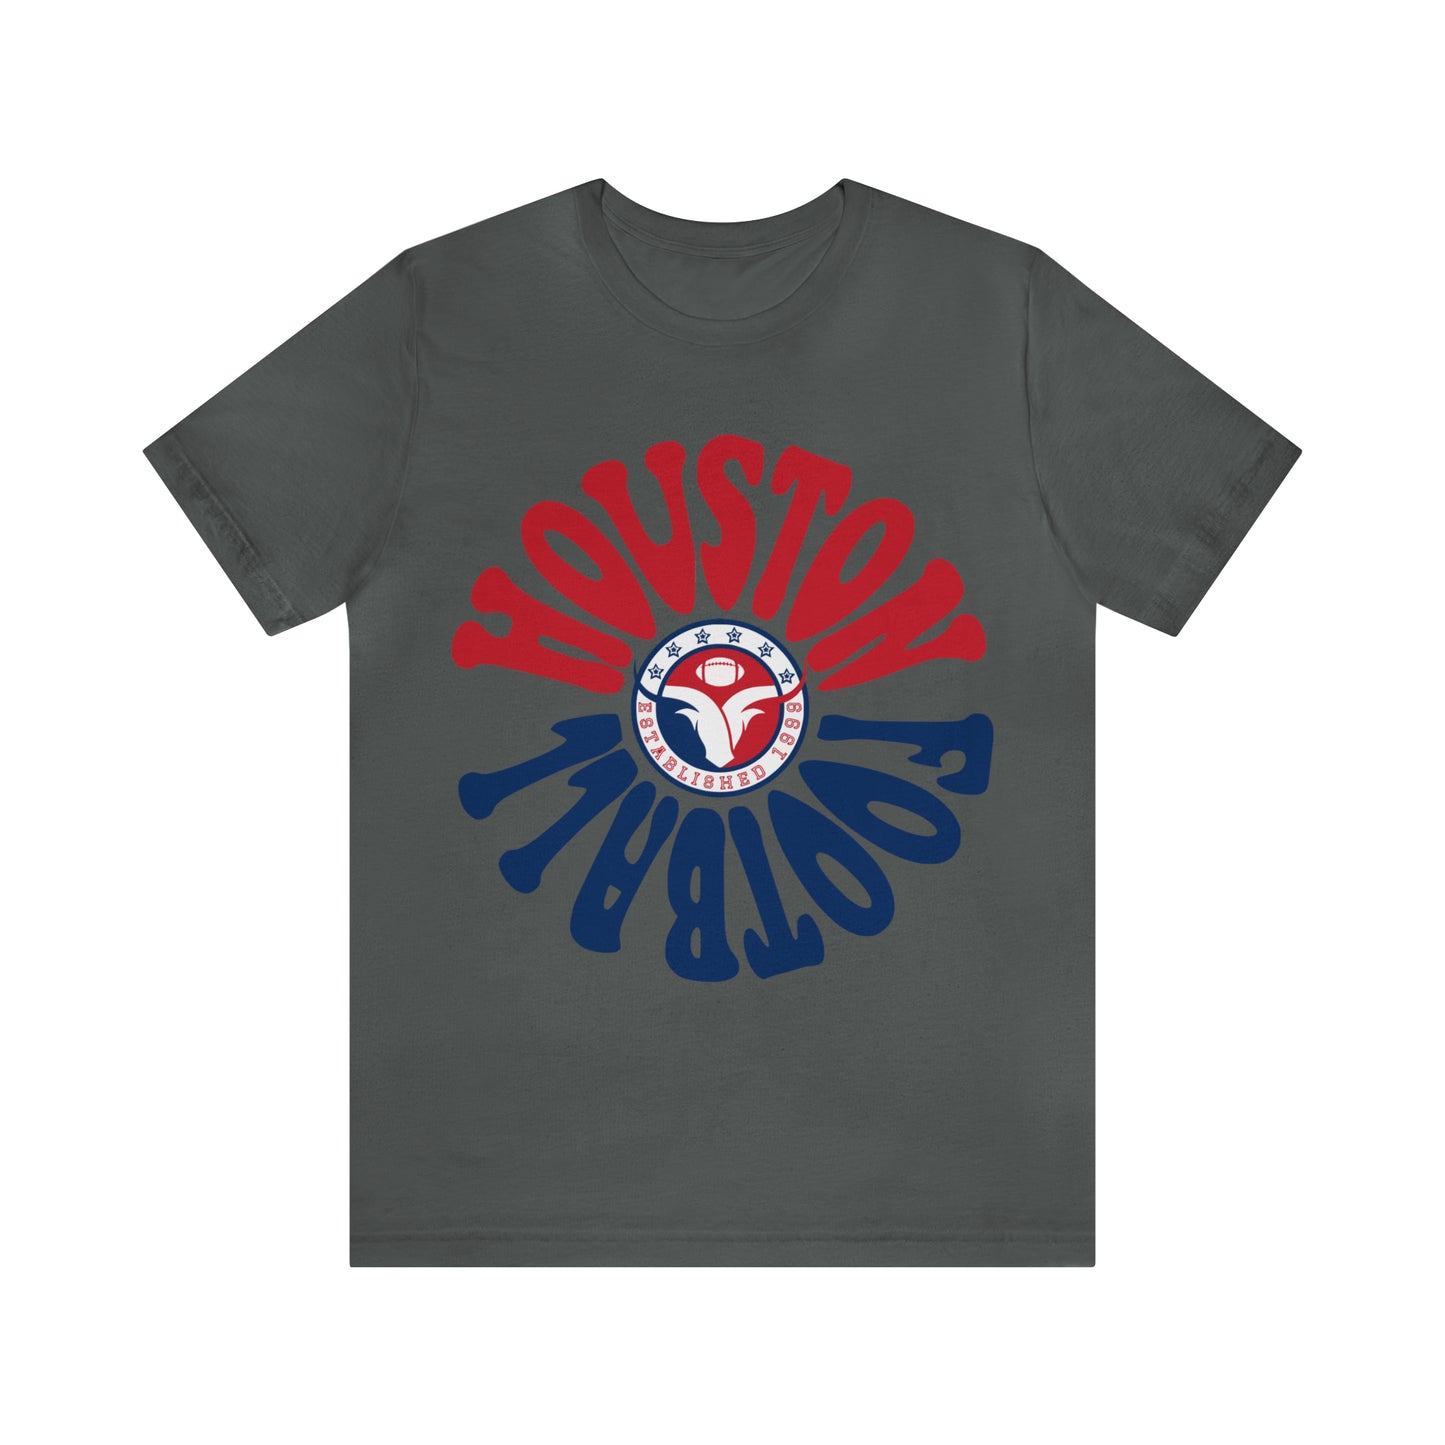 Hippy Houston Texans - Retro Houston Football Short Sleeve Shirt -  Men's Women's Kids Apparel - Design 2